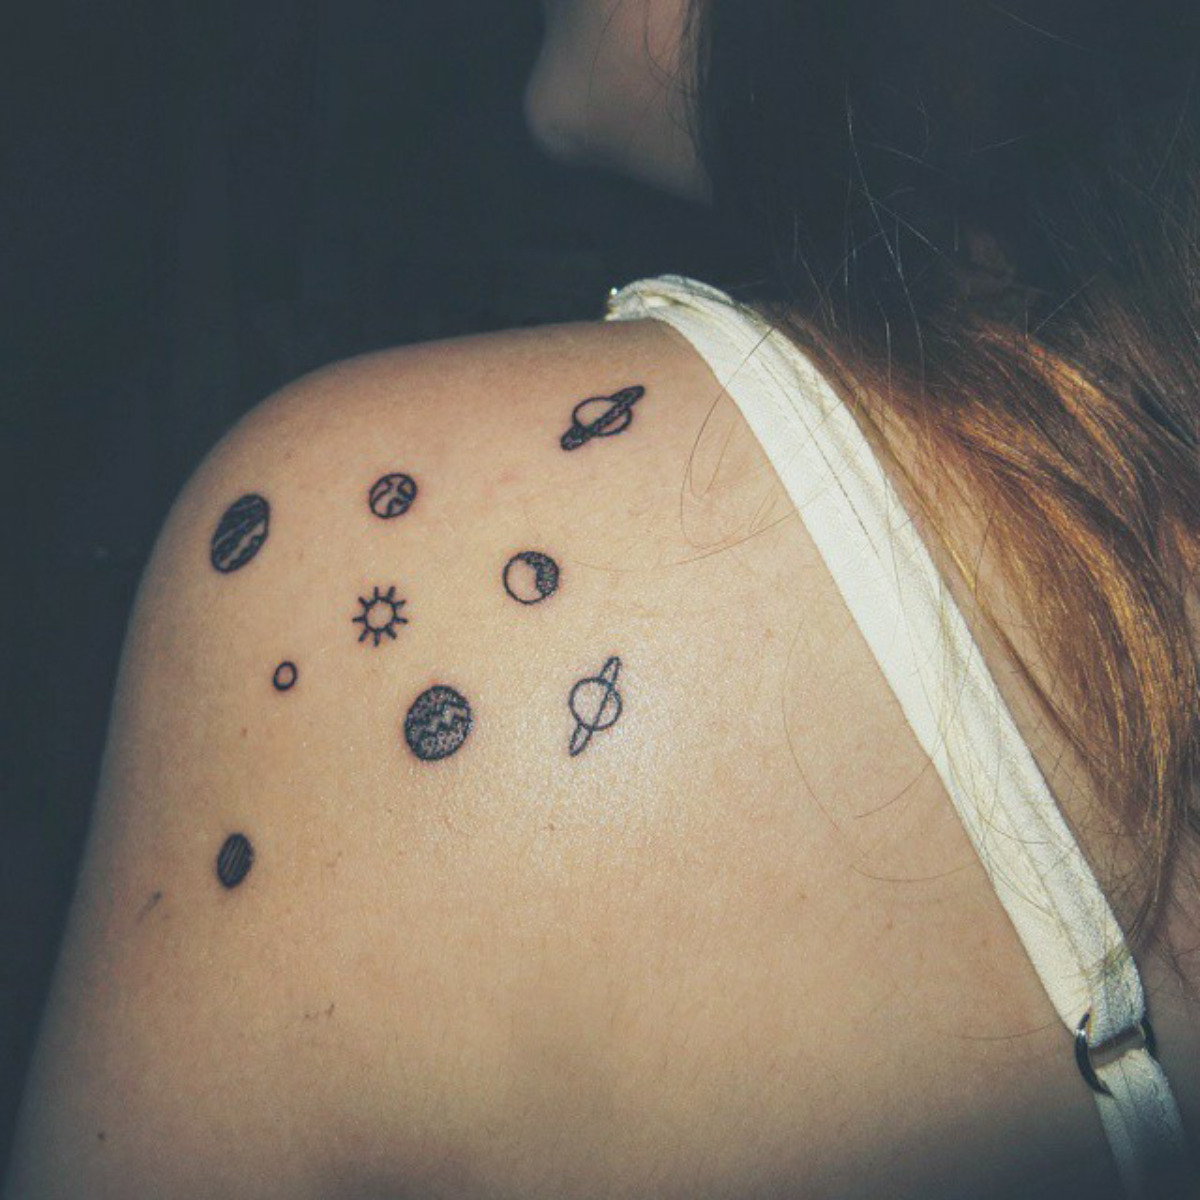 cutelittletattoos:
“ Little shoulder tattoo of a small galaxy on Sophia.
”